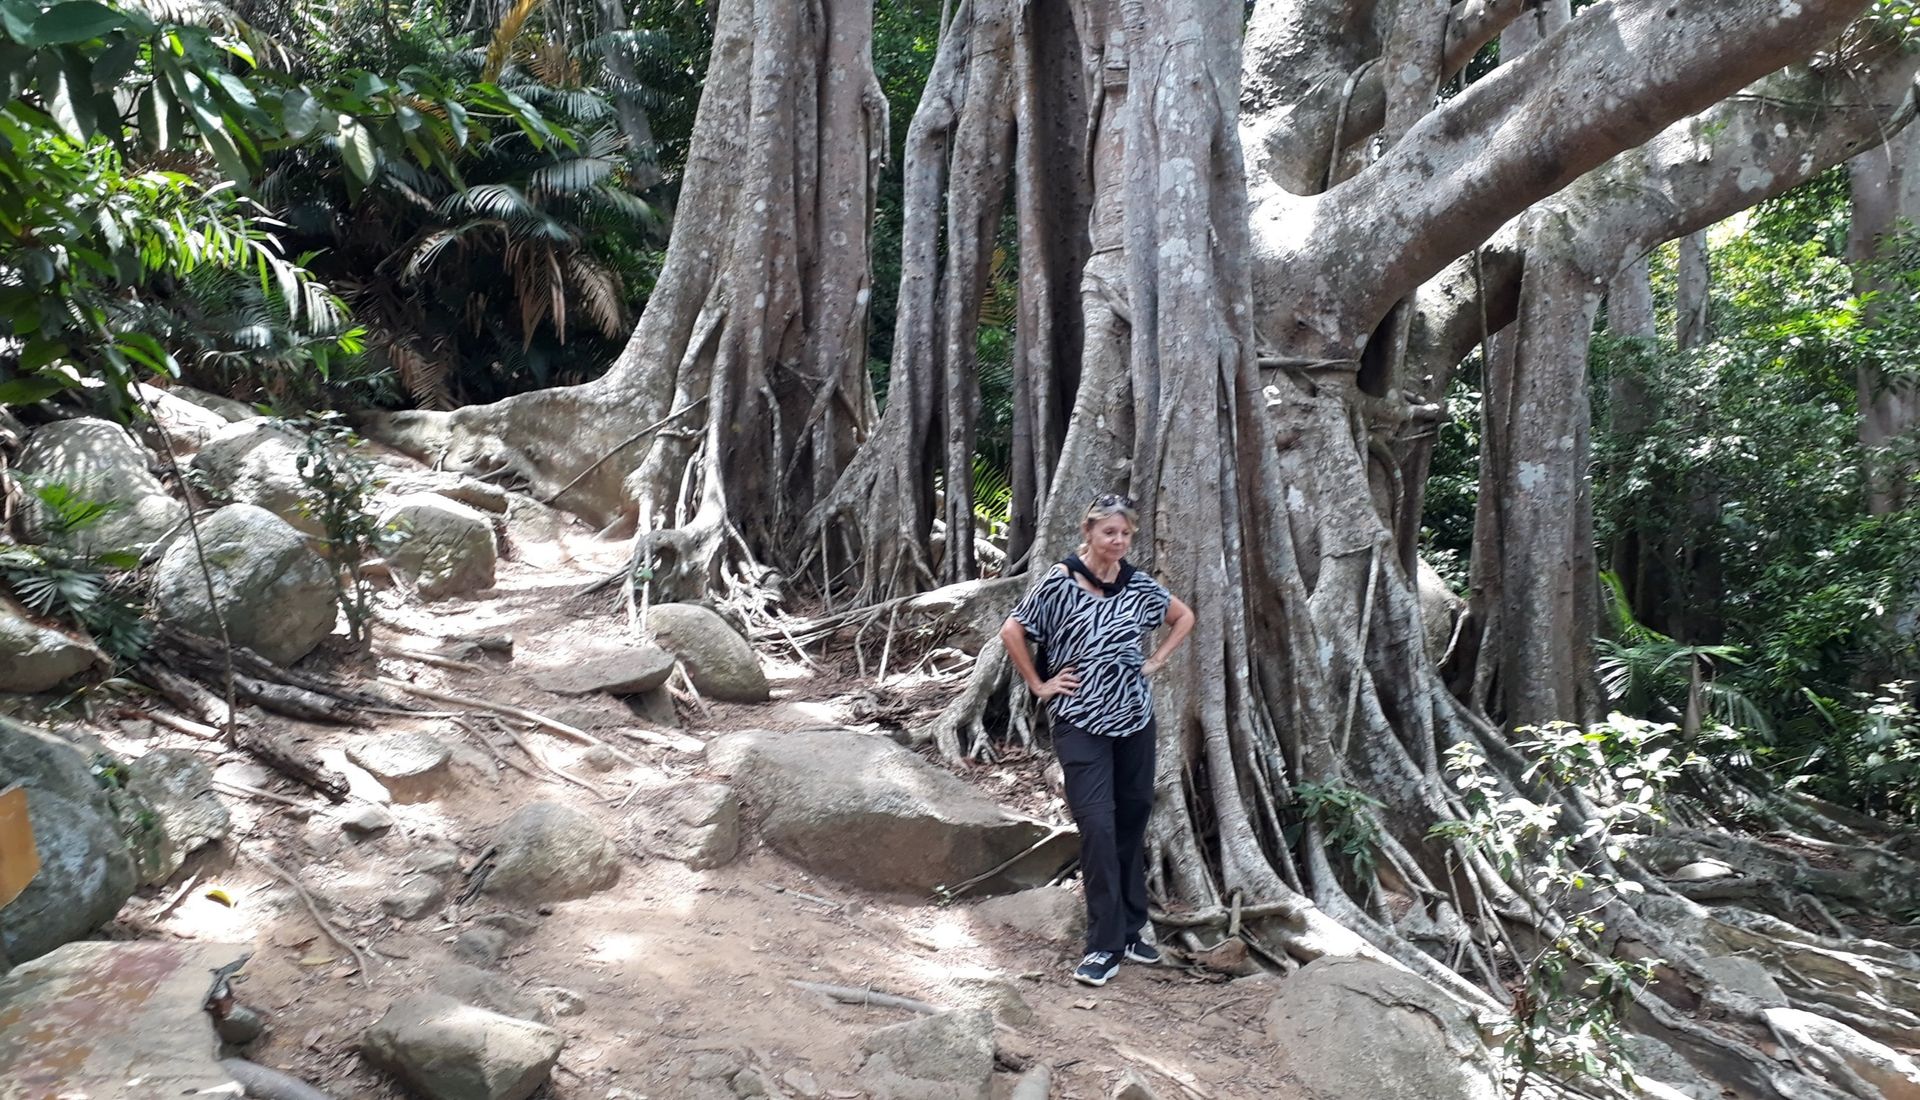 The 800 year old Banyan Tree